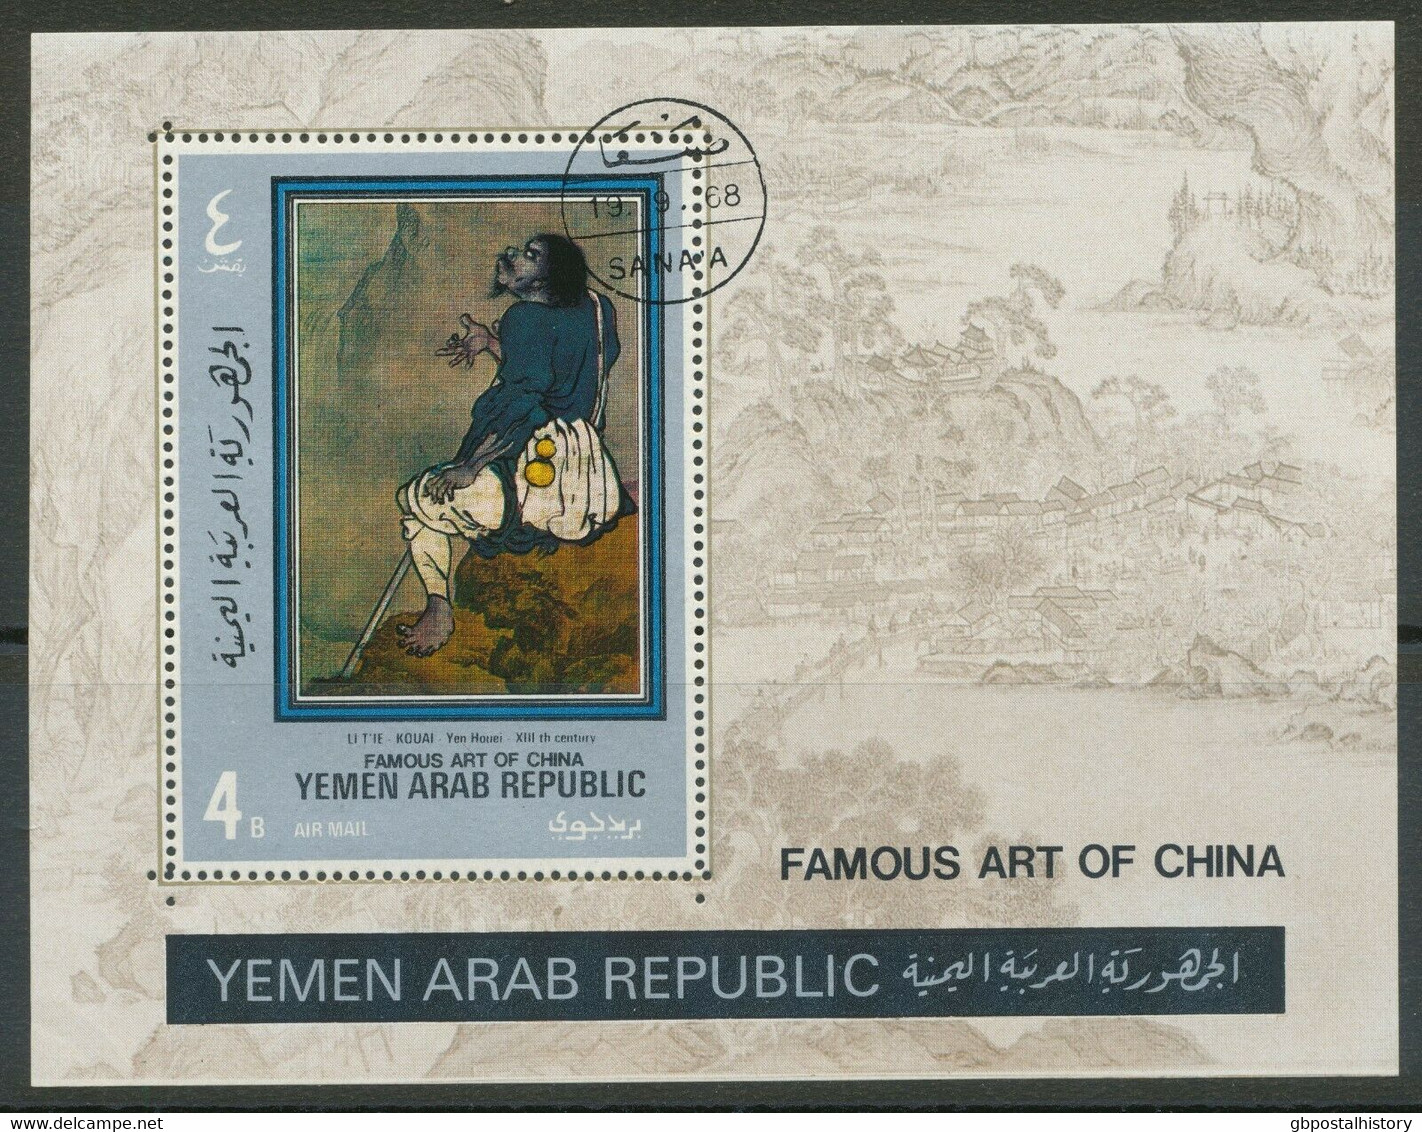 REPUBLIC OF YEMEN 1968 Famous Art Of China 4 B. Painting VFU MS MAJOR VARIETY - Yémen